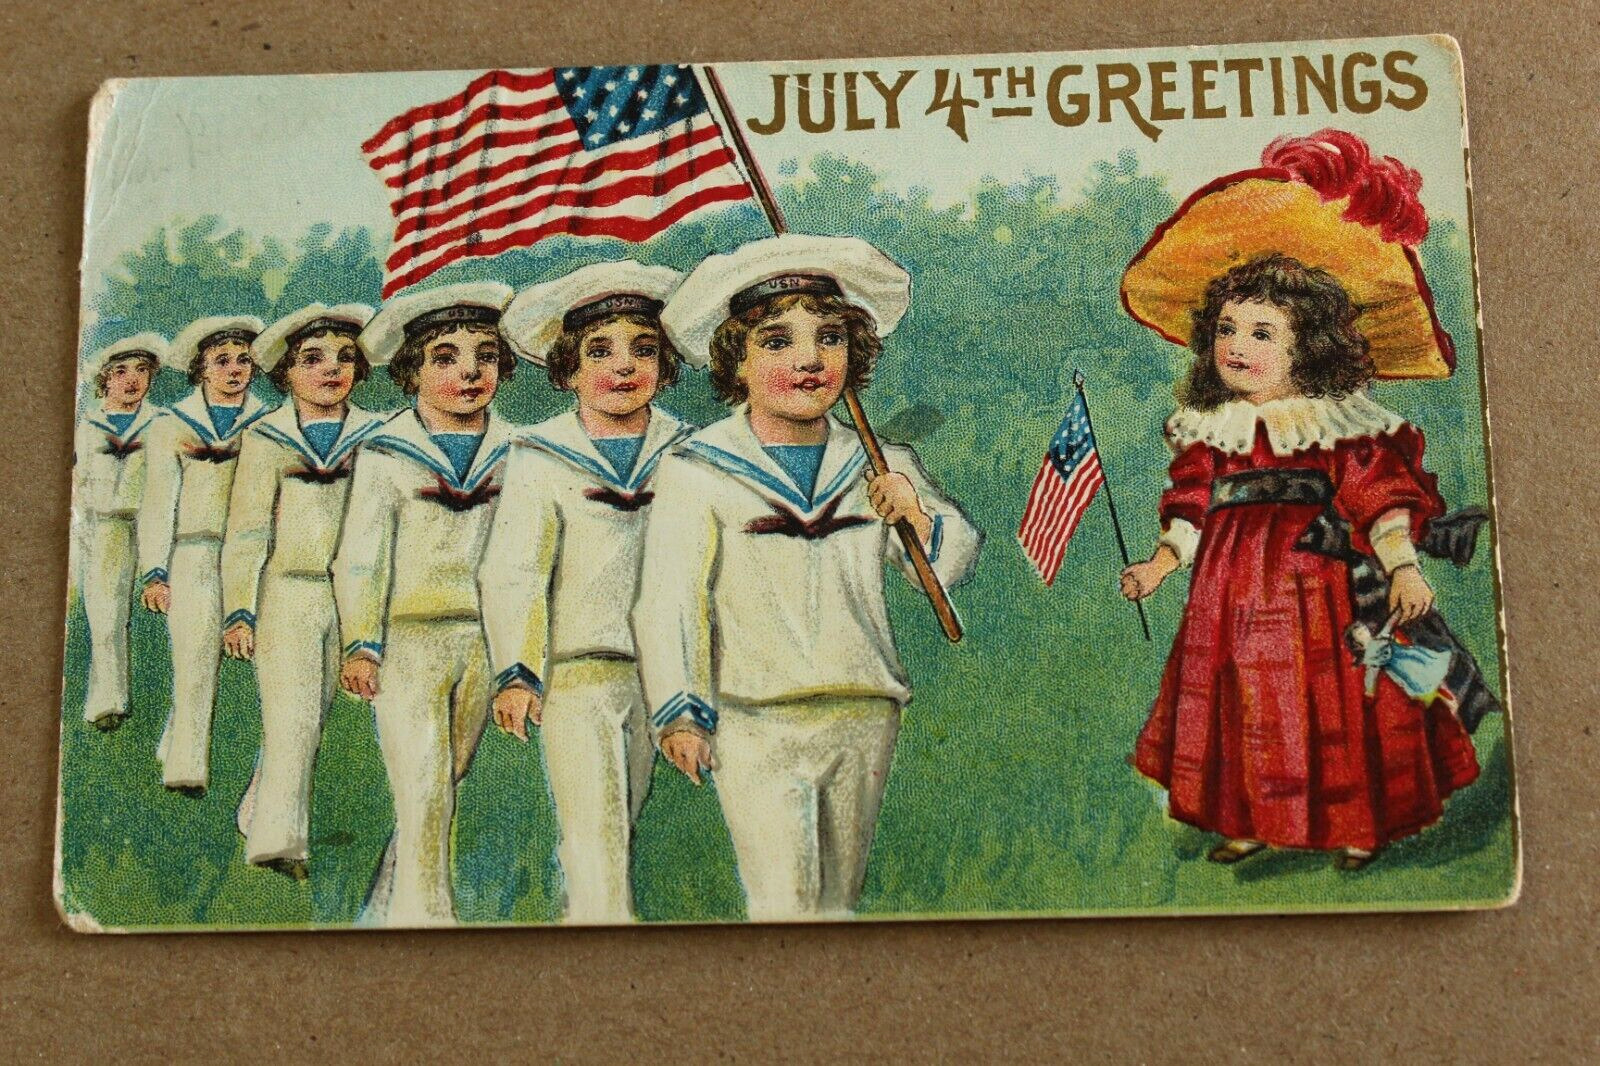 Antique Postcard July 4th Greetings Embossed - Children in Uniform Waving Flag